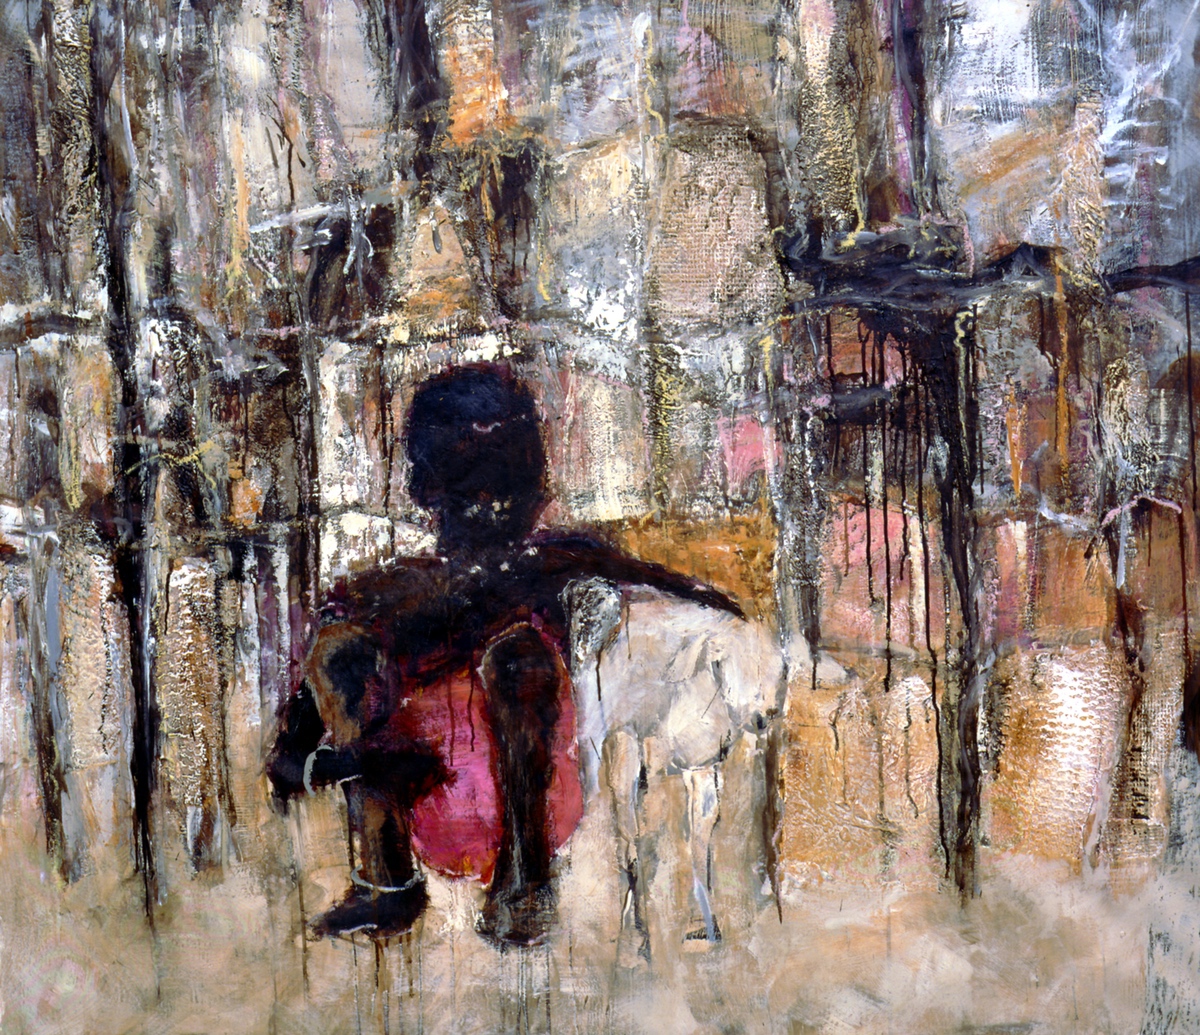 ”Masai” 2003, 120 x 140 cm. Akryl, olie sand og håndgjort papir på lærred. (Carsten Frank nr. 767) Sold